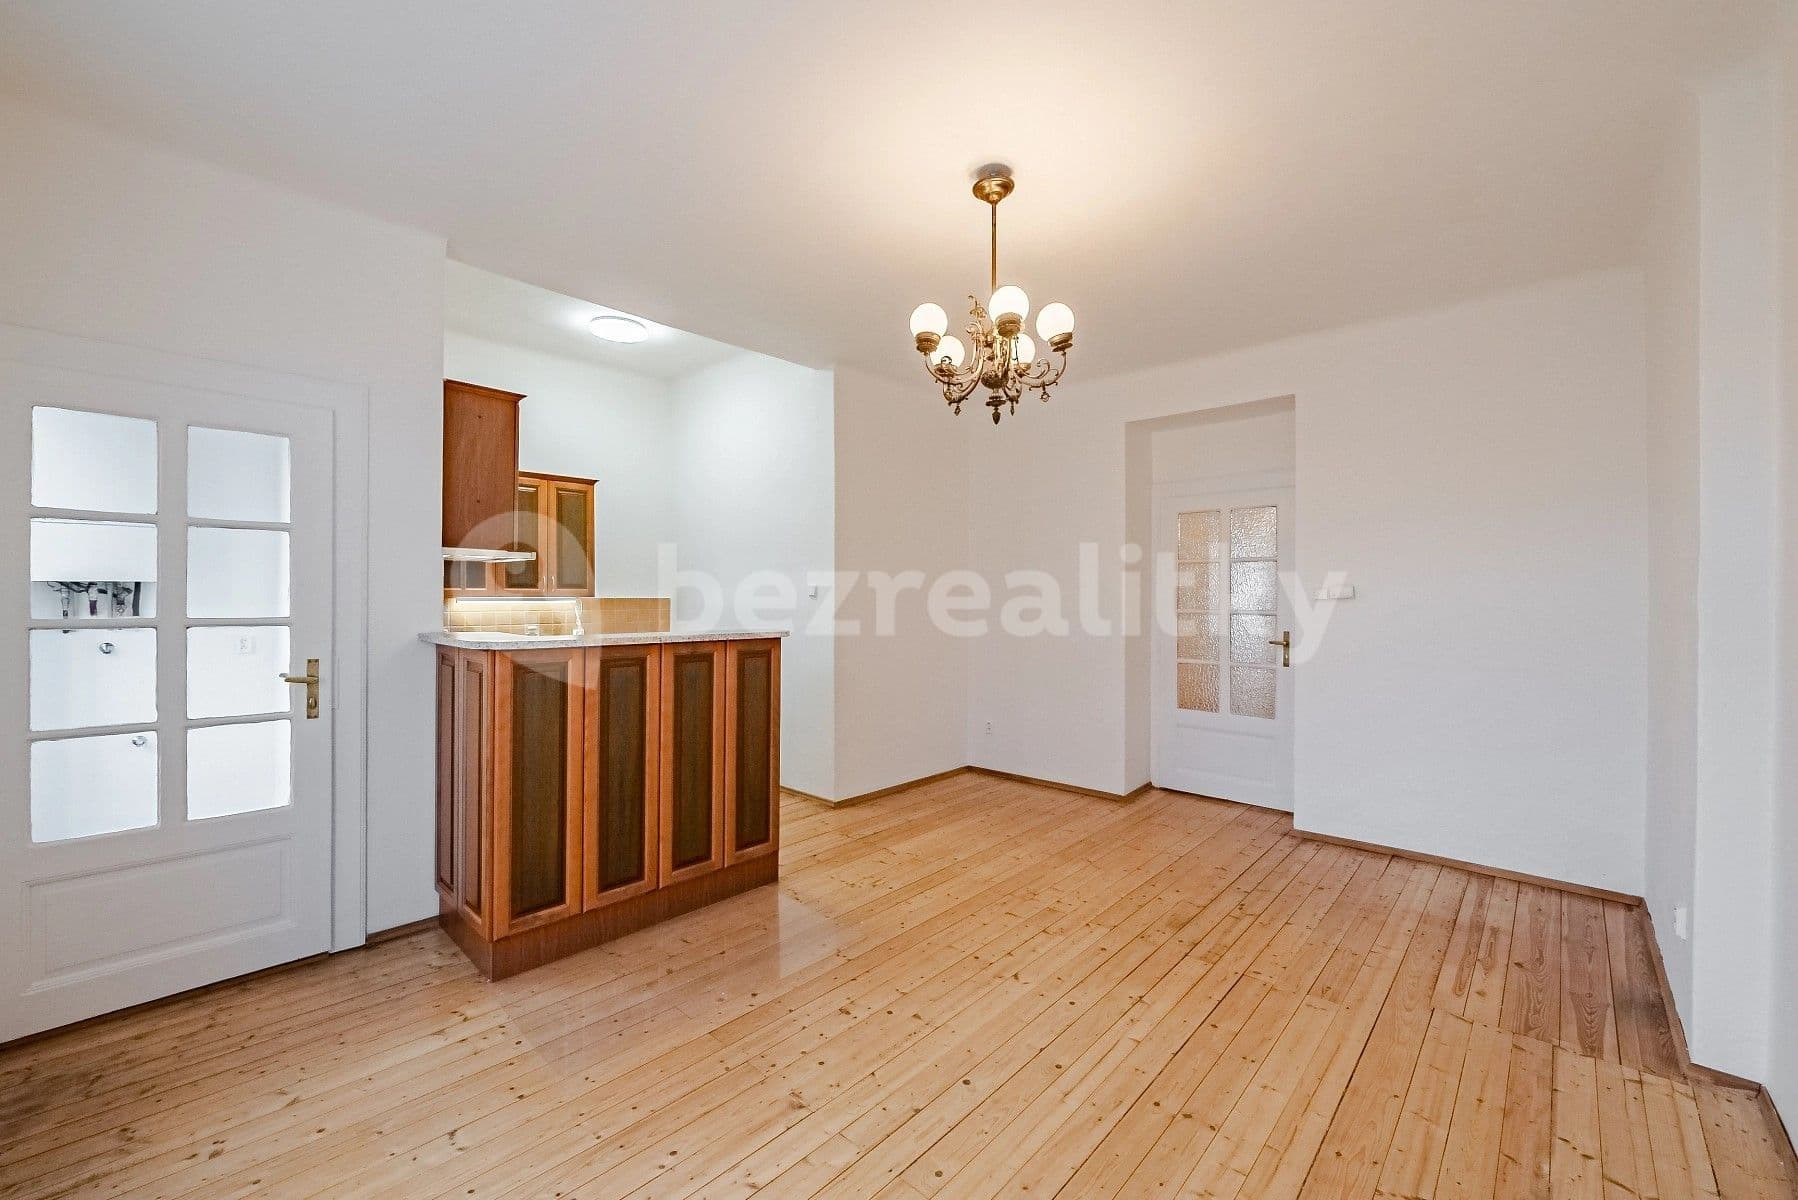 2 bedroom with open-plan kitchen flat for sale, 98 m², Slavojova, Prague, Prague